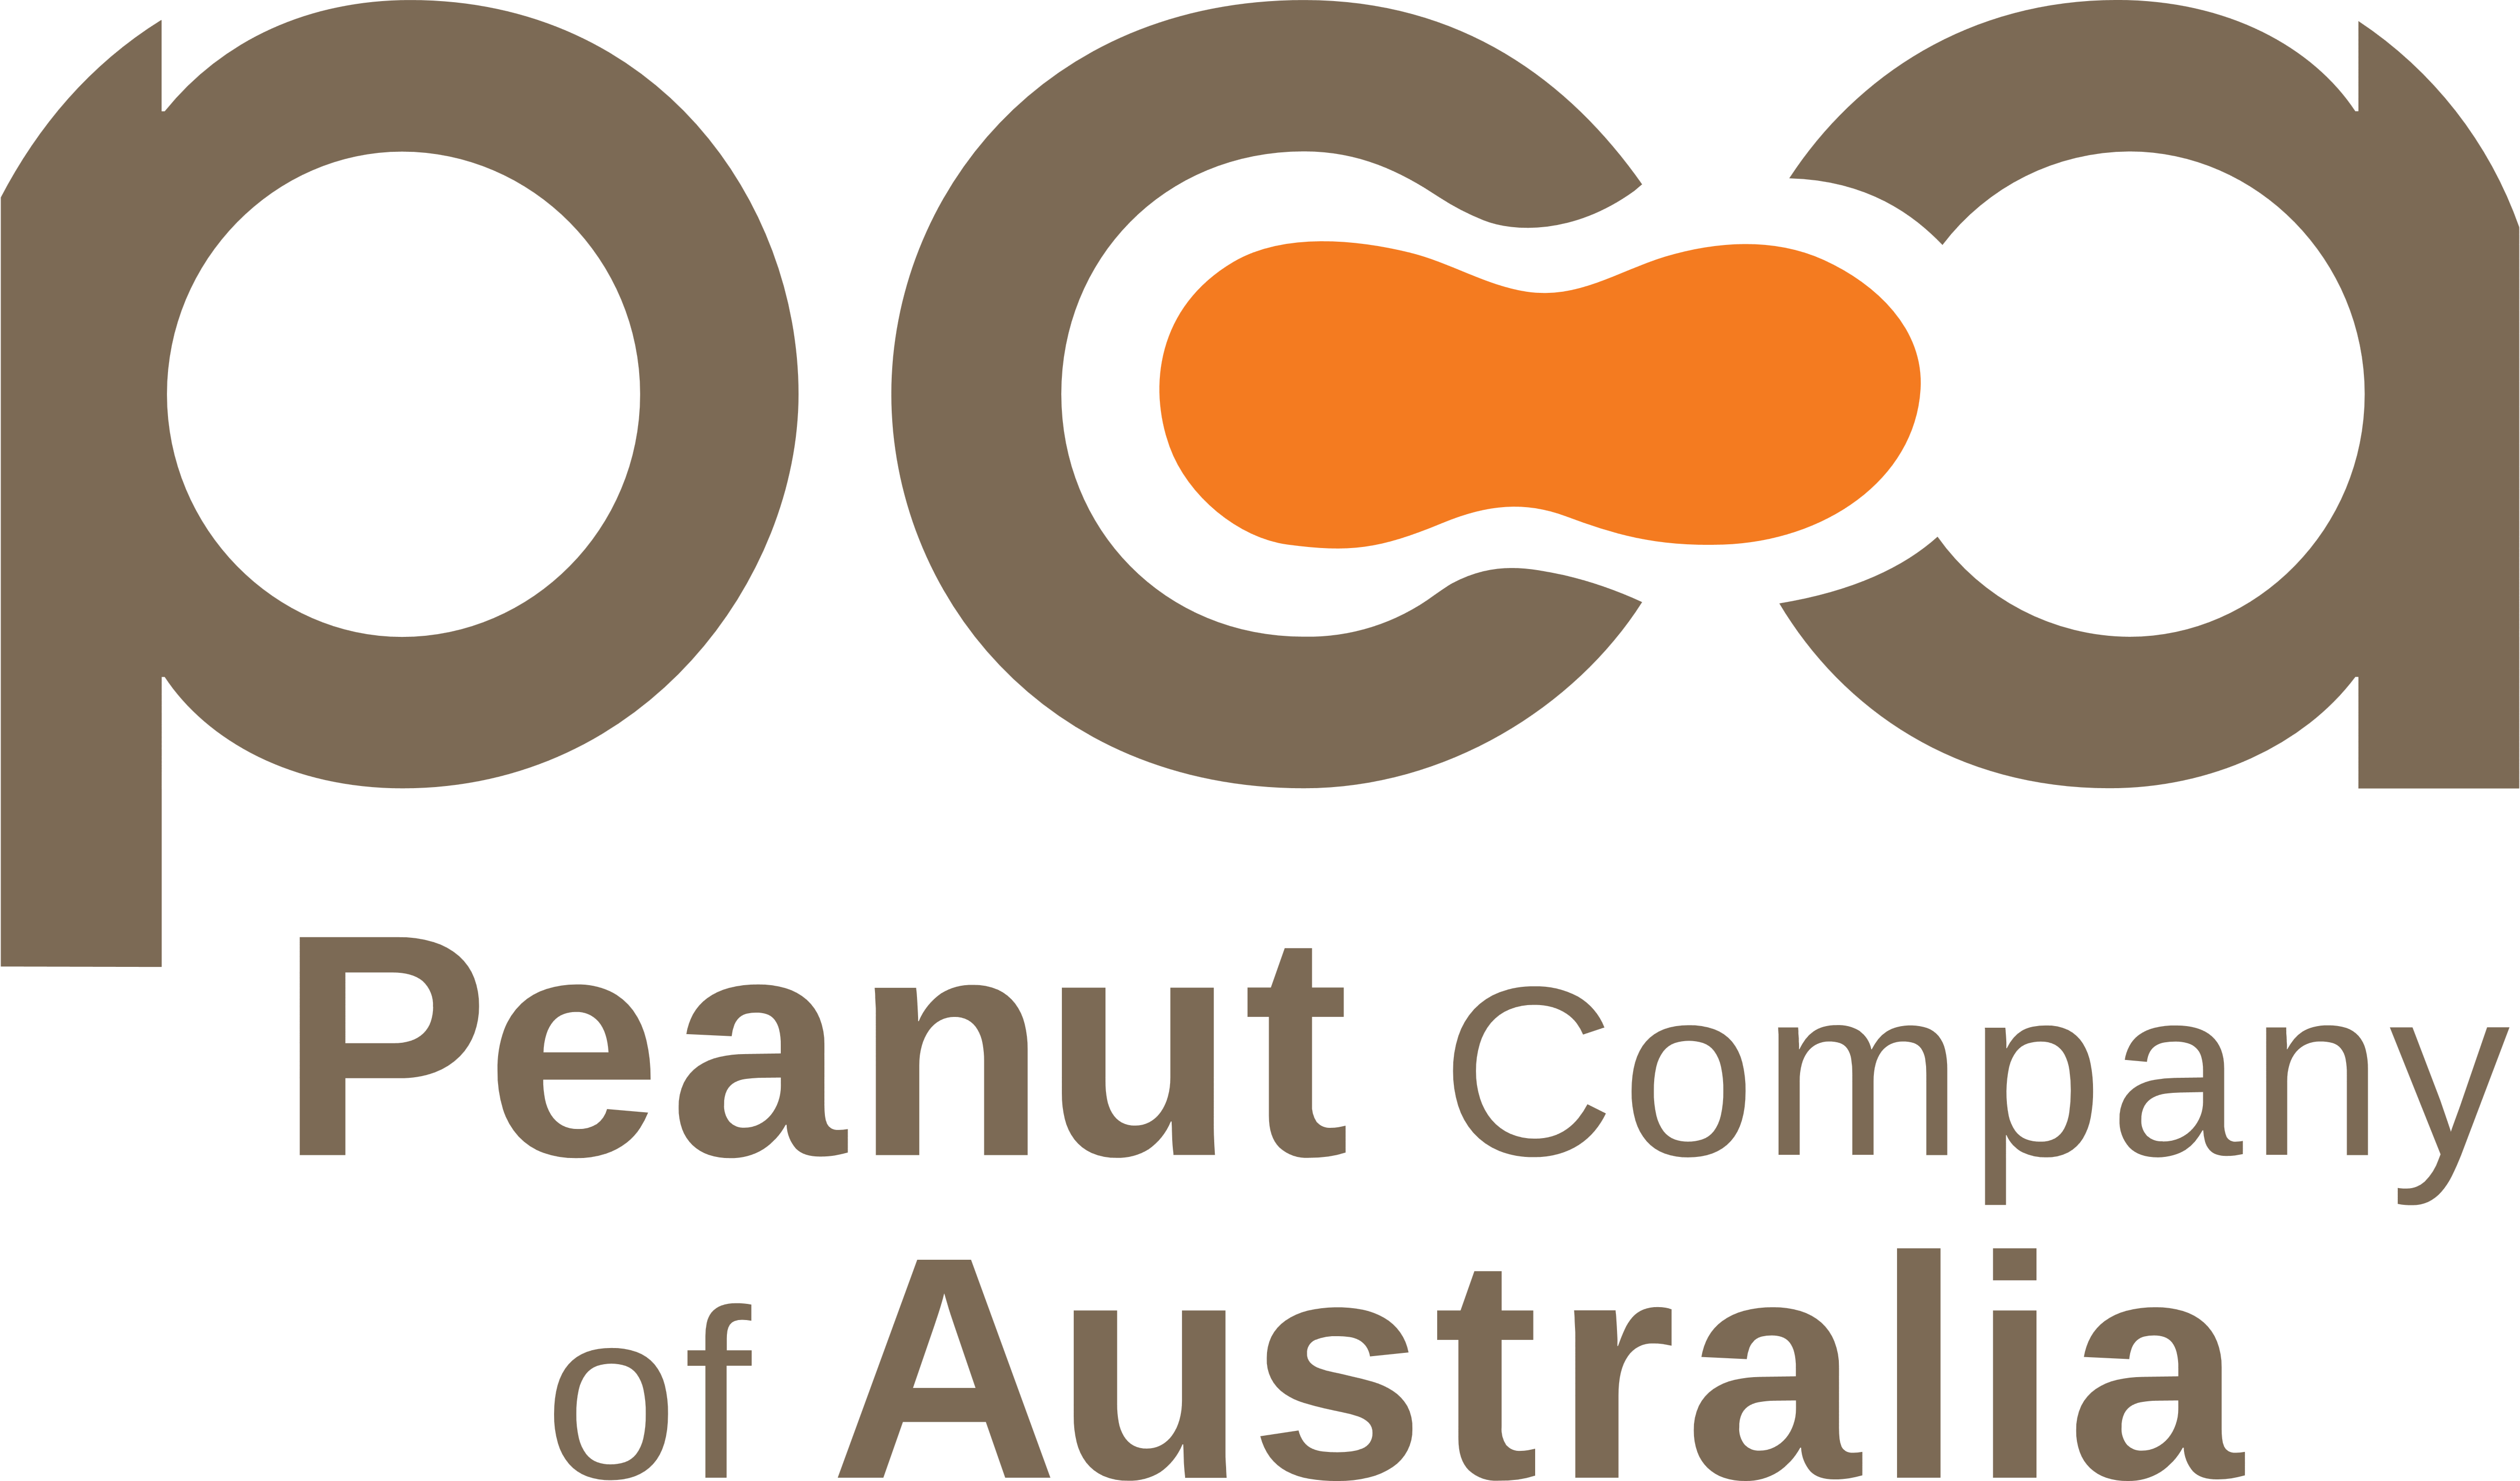 The Peanut Company of Australia  Logos Download